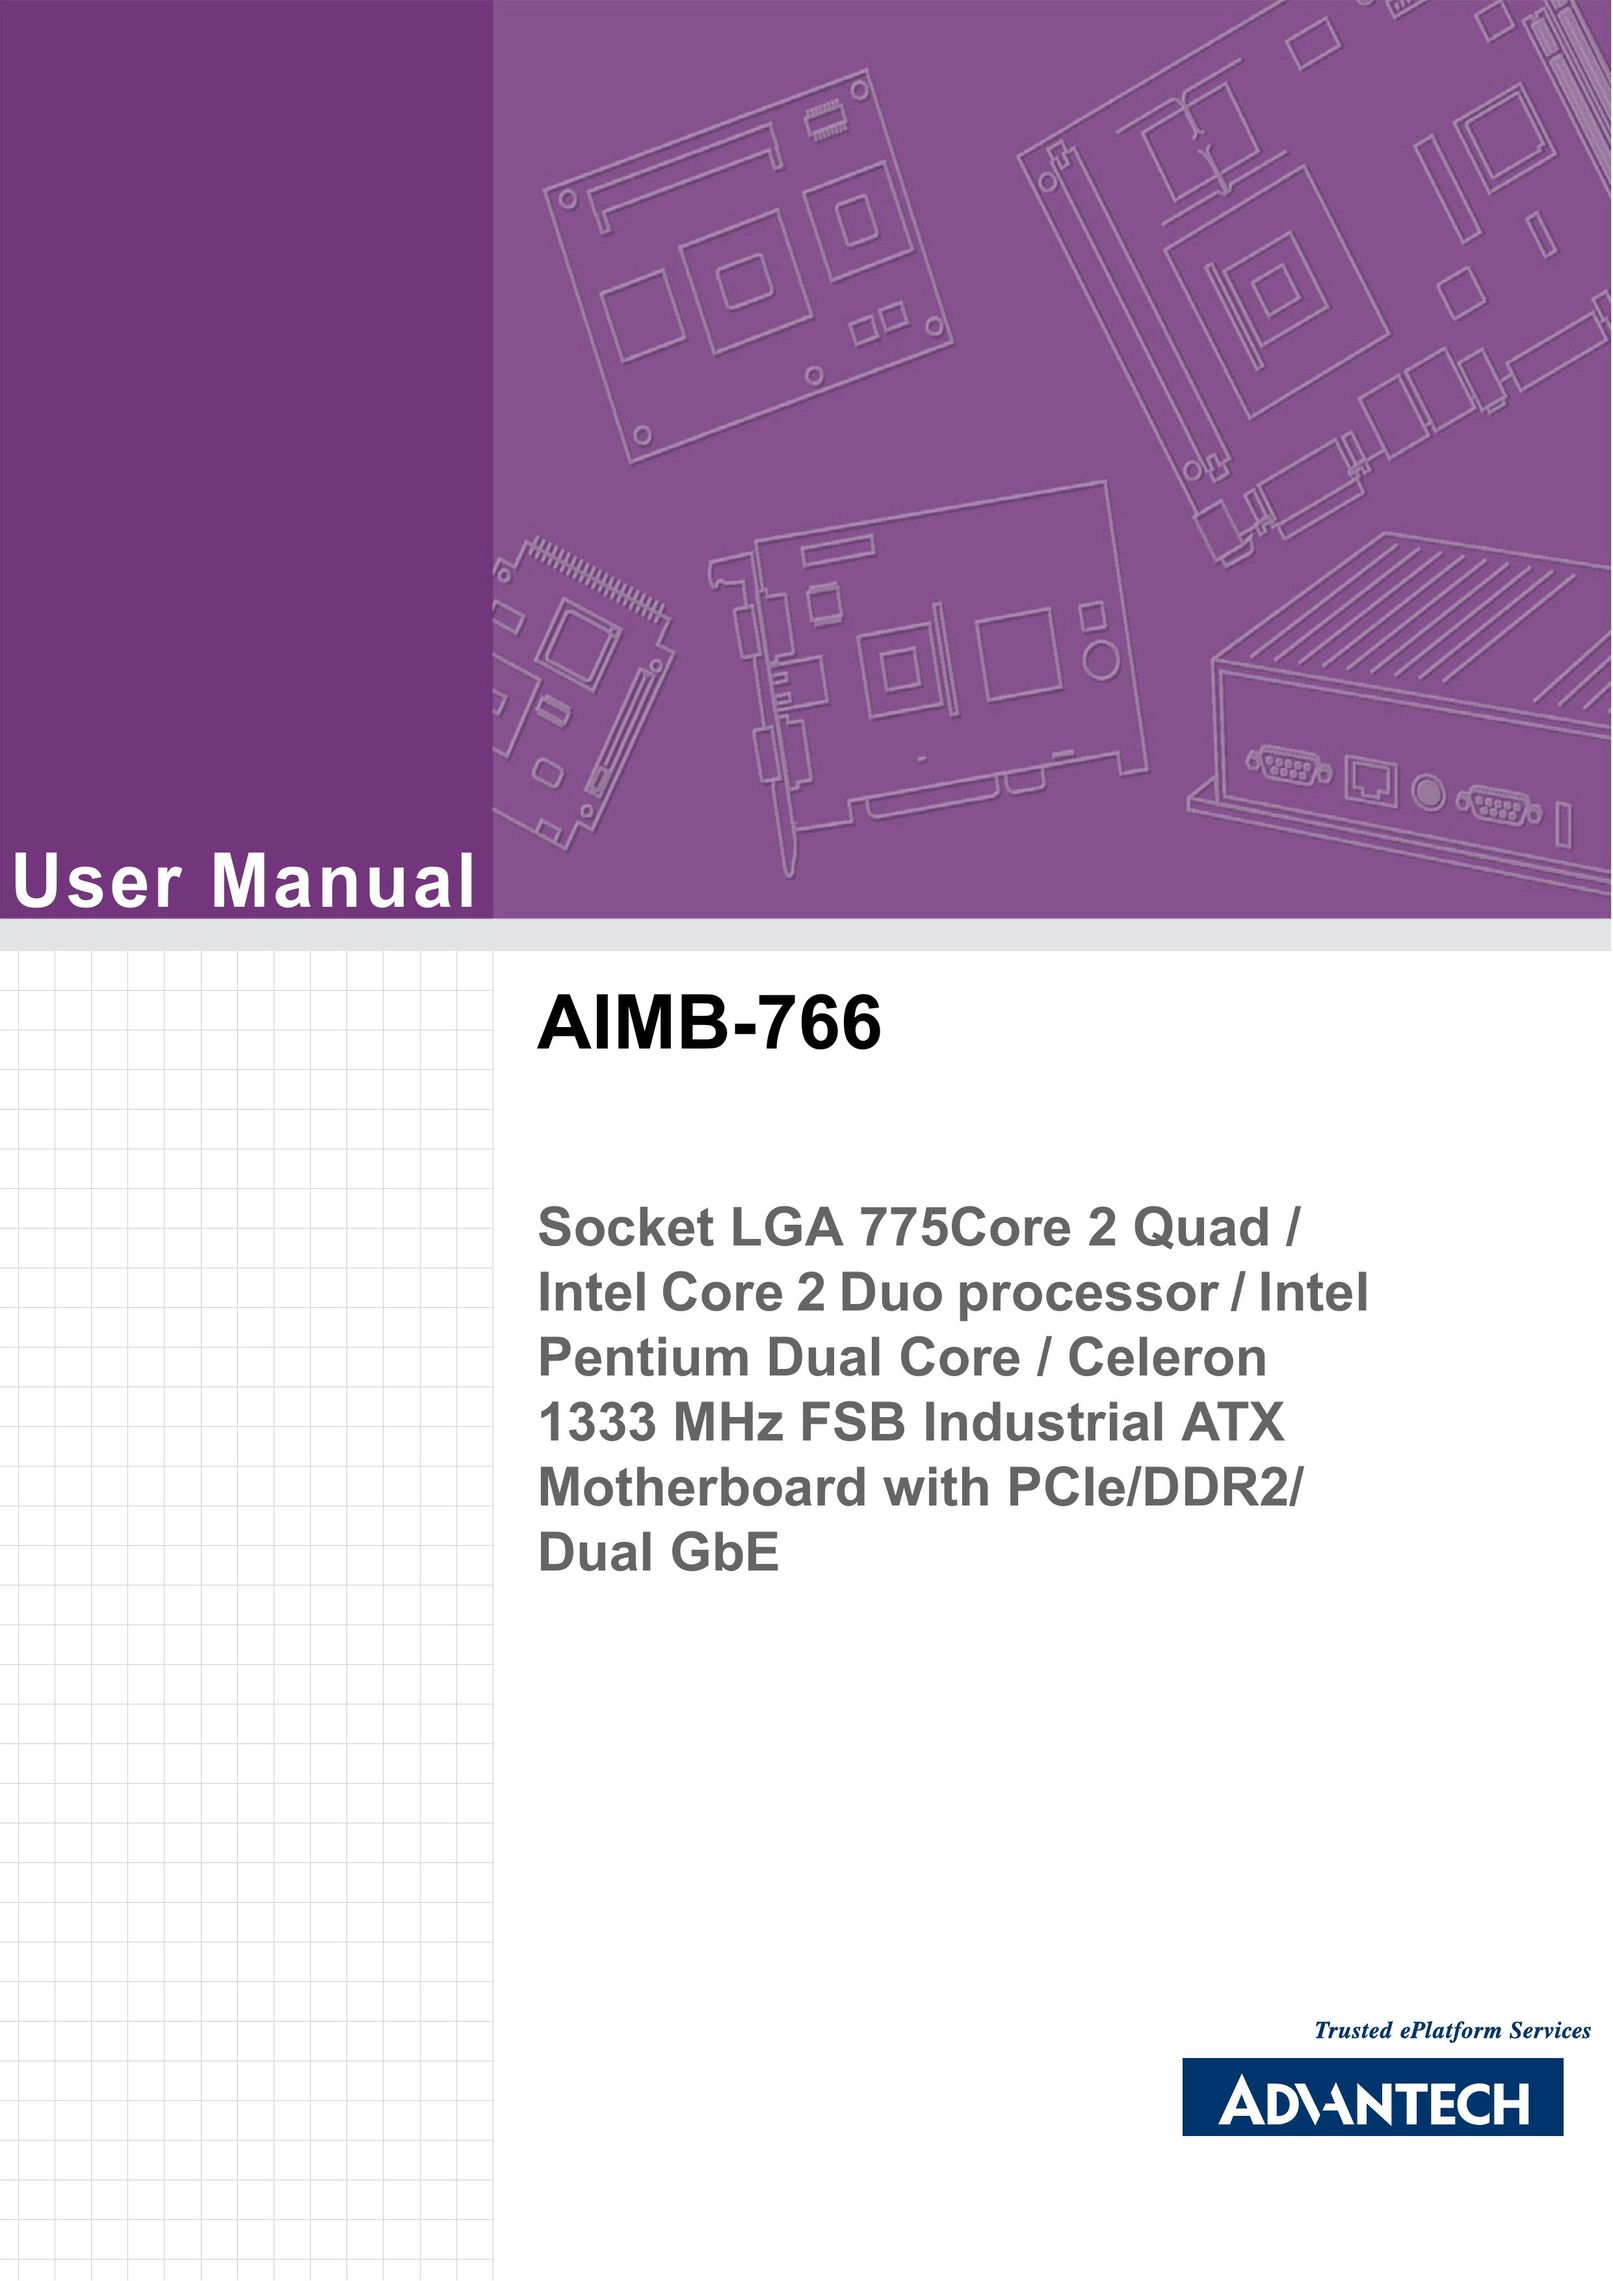 Advantech AIMB-766 Computer Hardware User Manual